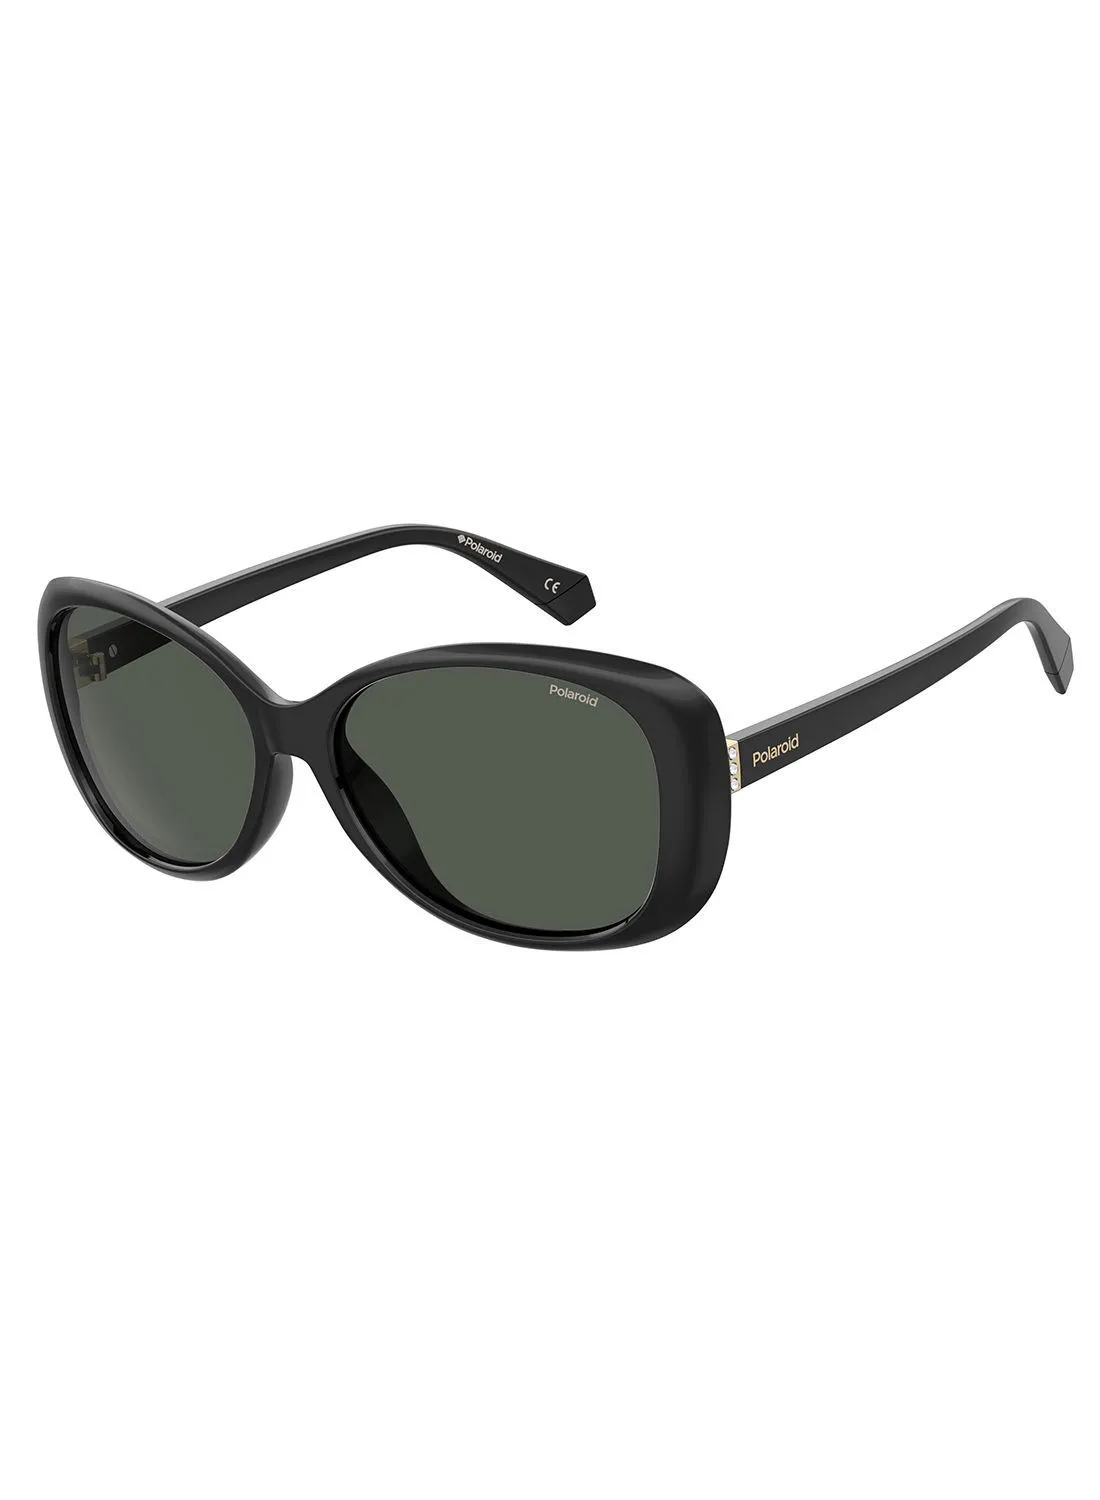 Polaroid Polarized Round Eyewear Sunglasses PLD 4097/S Black 58